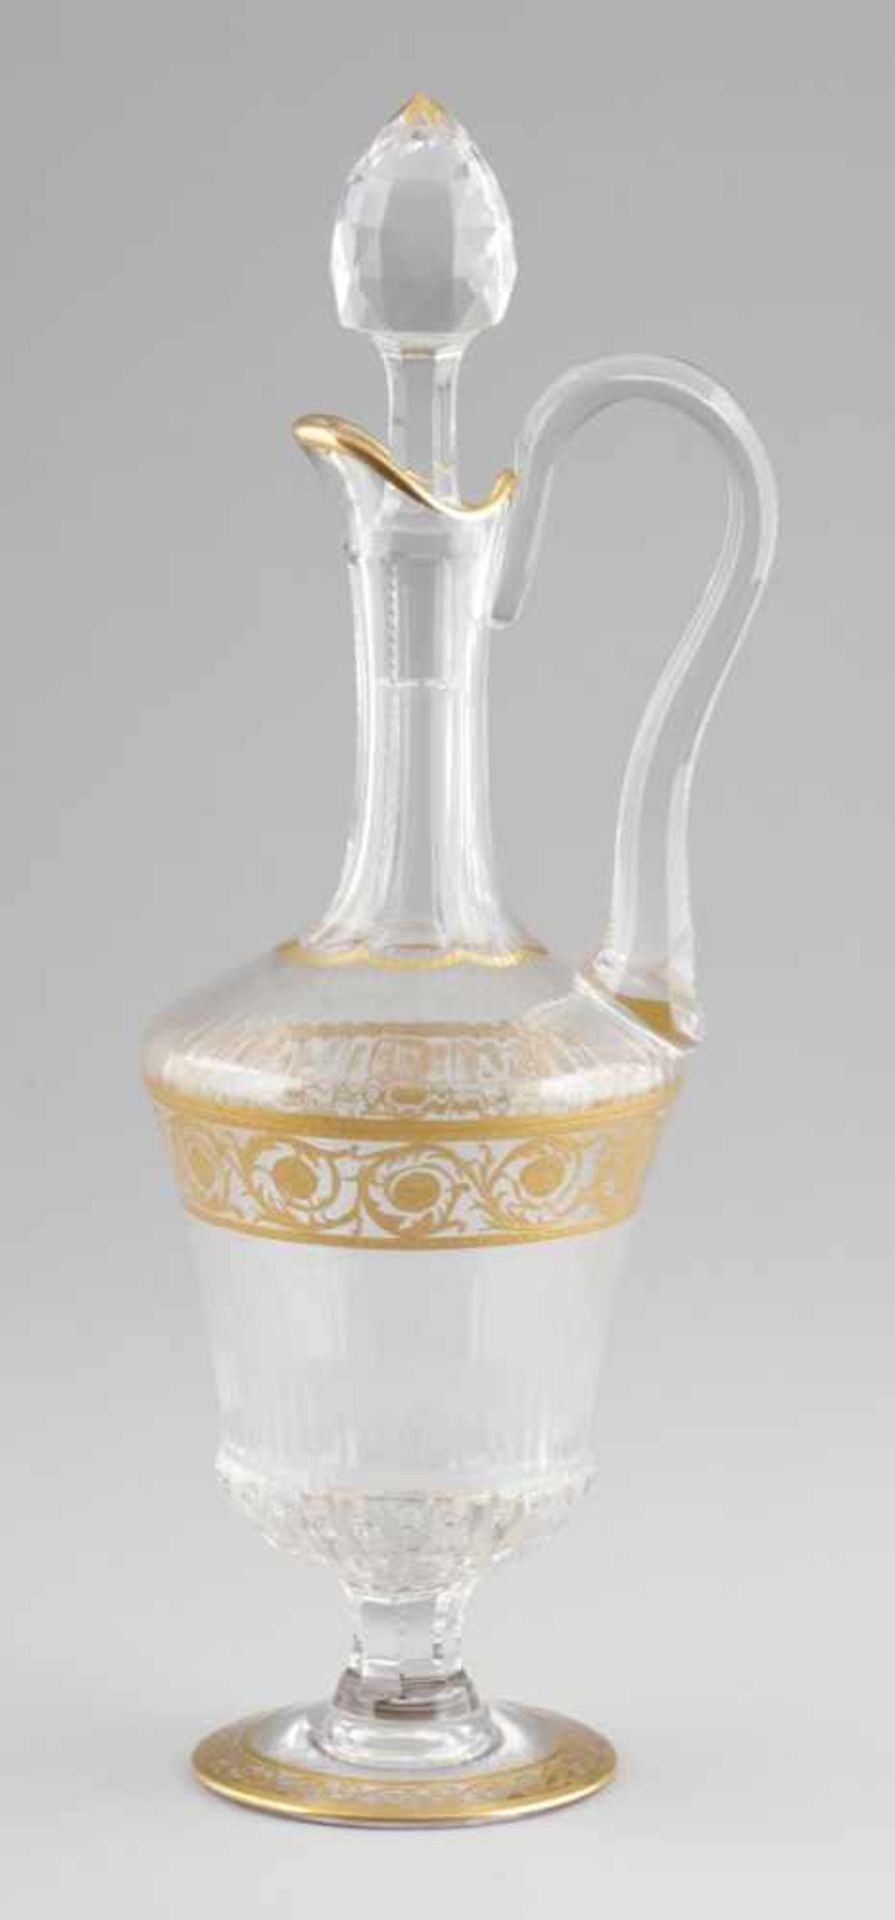 Karaffe mit Stöpsel - Thistle Verreries & Cristalleries de Saint Louis. Farbloses Kristallglas,